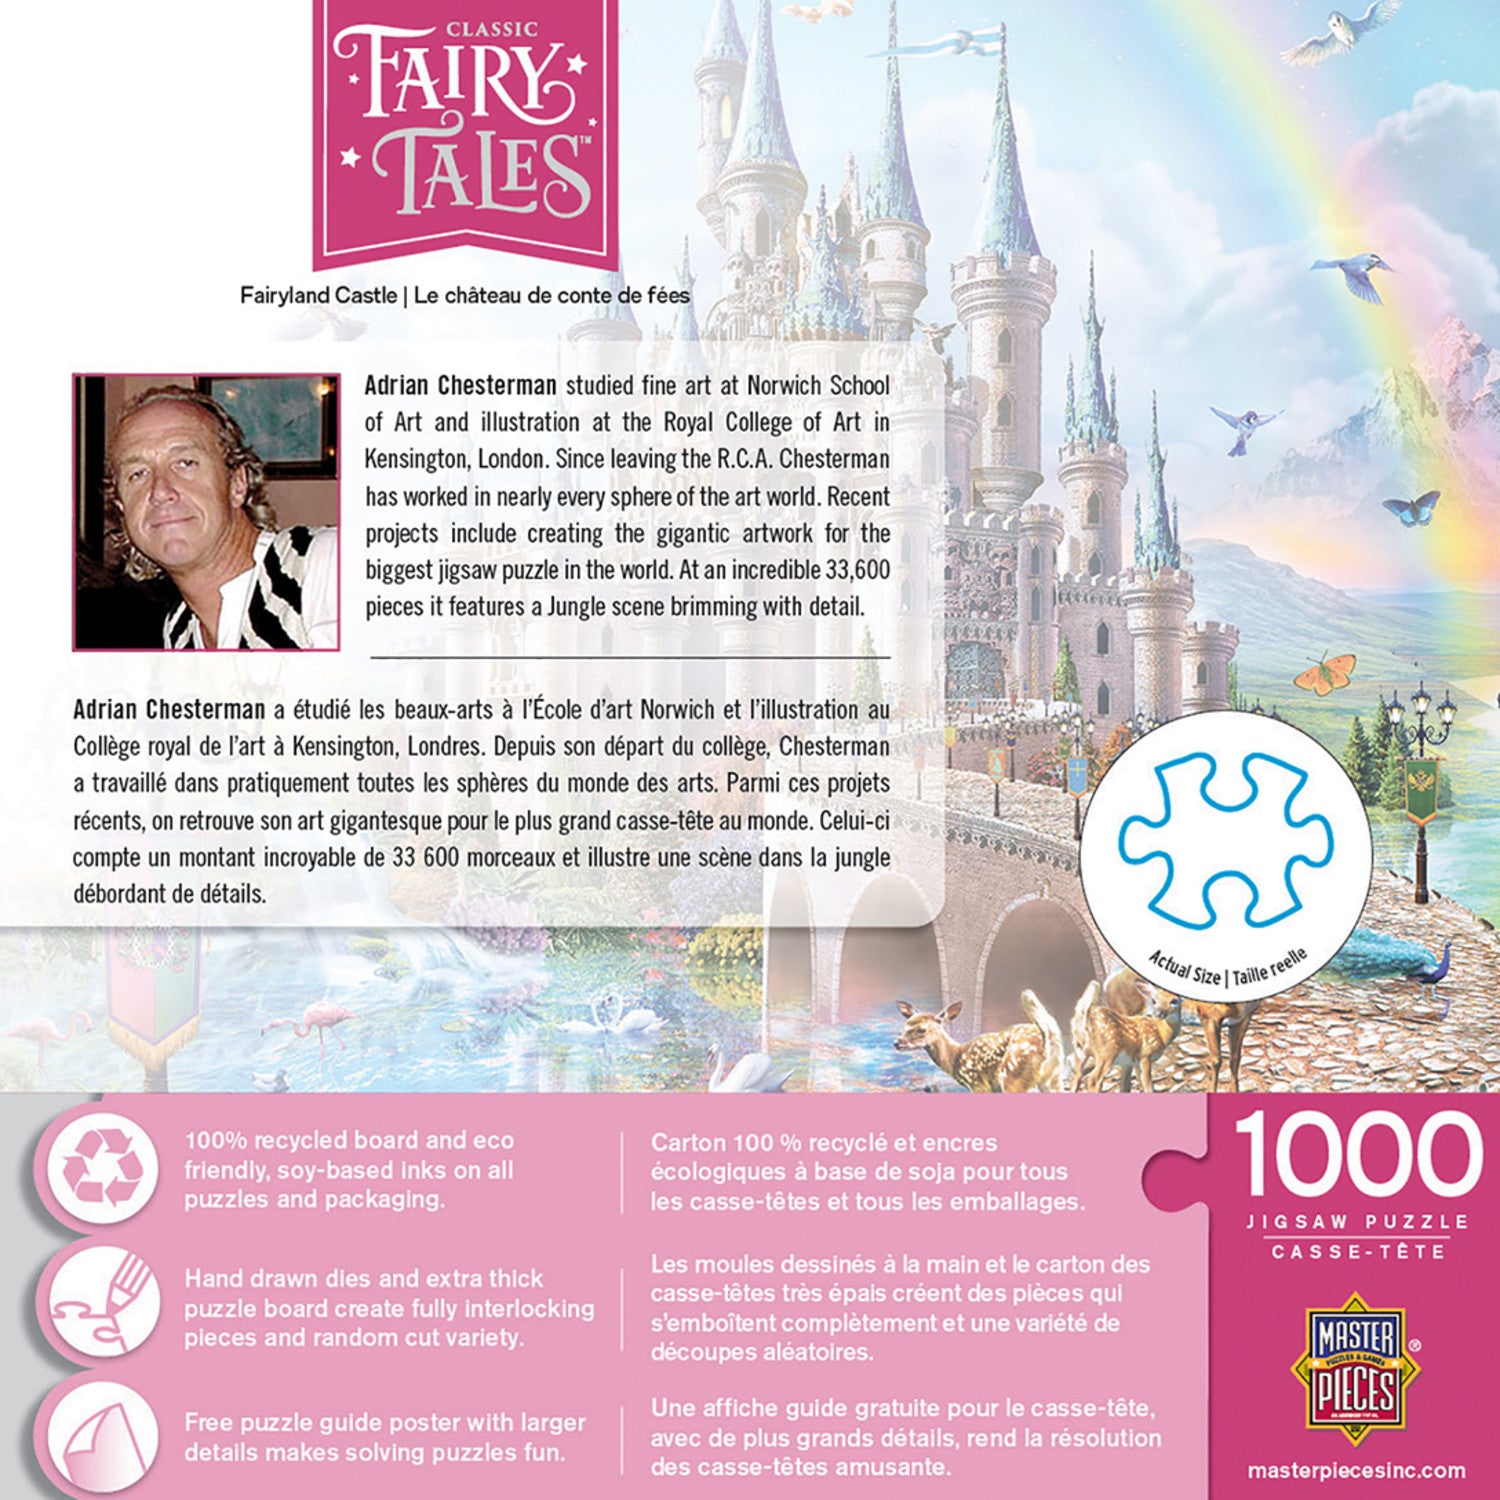 Classic Fairy Tales - Fairyland Castle 1000 Piece Puzzle